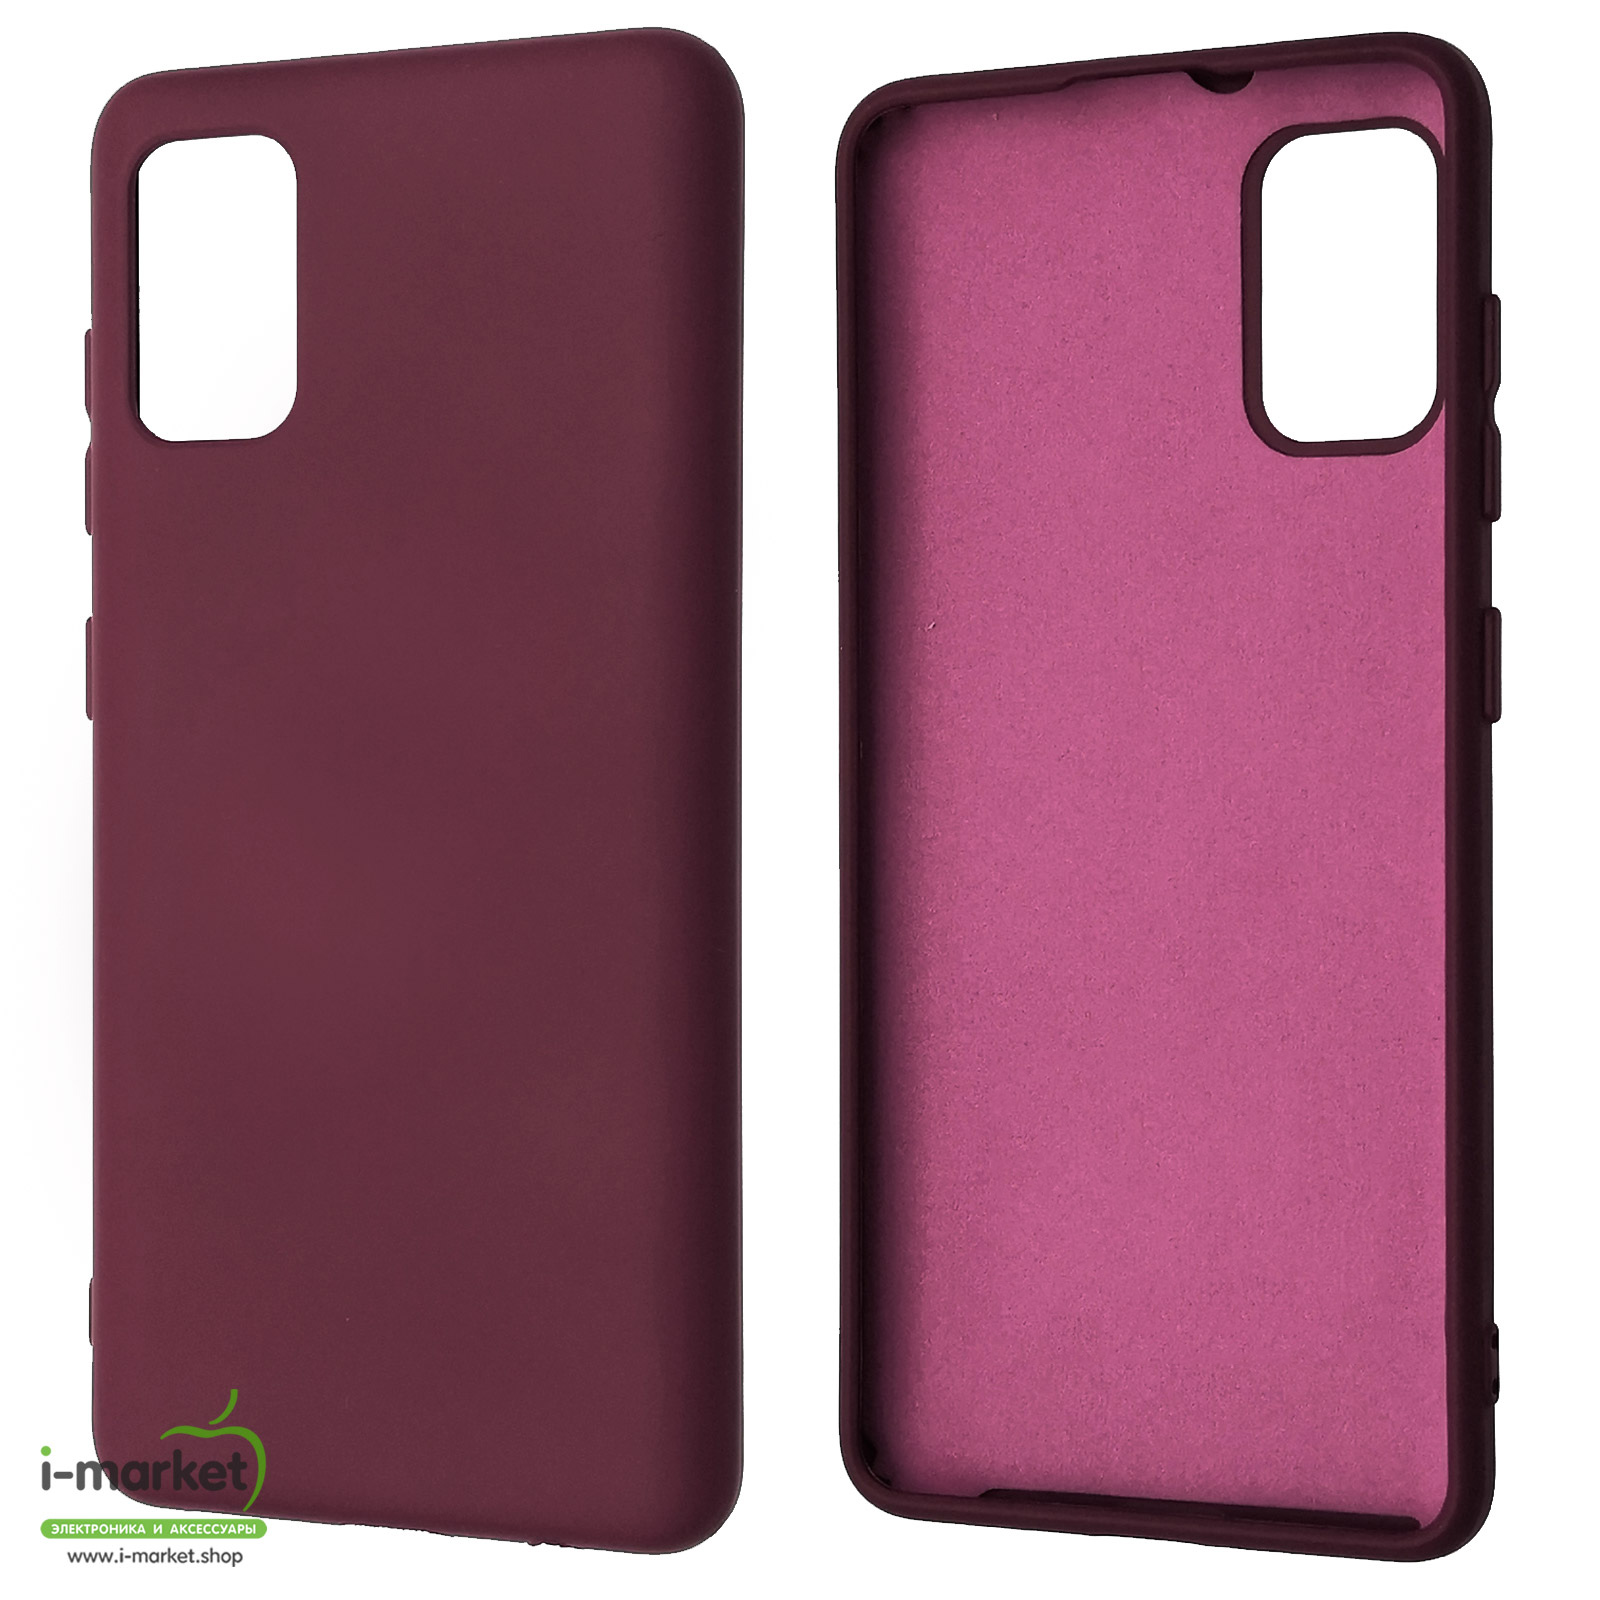 Чехол накладка Silicon Cover для SAMSUNG Galaxy A41 (SM-A415), силикон, бархат, цвет бордовый